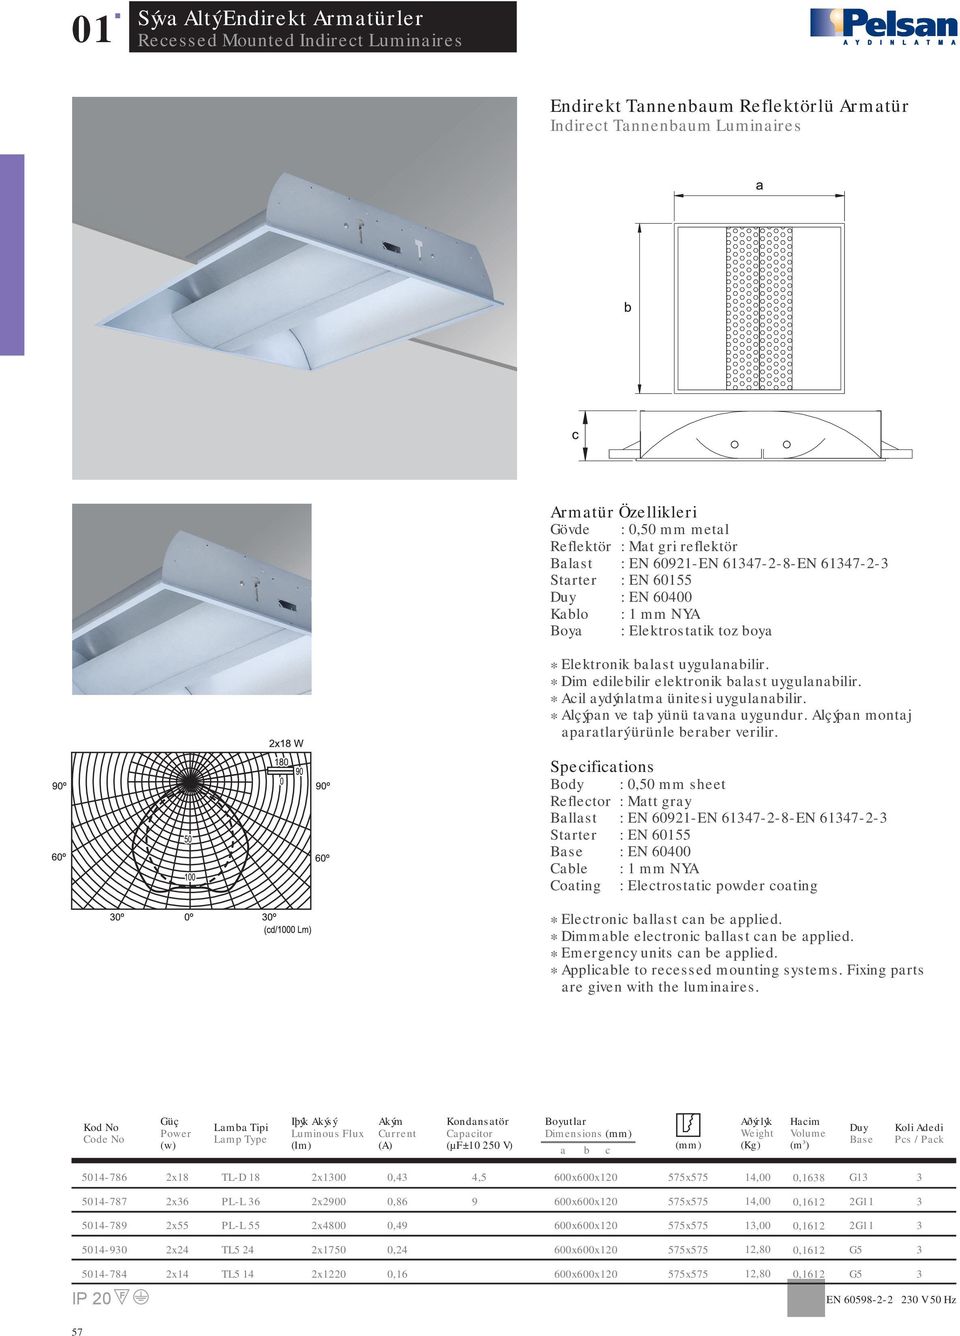 Body : 0,50 mm sheet Reflector : Matt gray Ballast : EN 0921-EN 17-2-8-EN 17-2- : EN 000 Coating : Electrostatic powder coating * Applicable to recessed mounting systems.